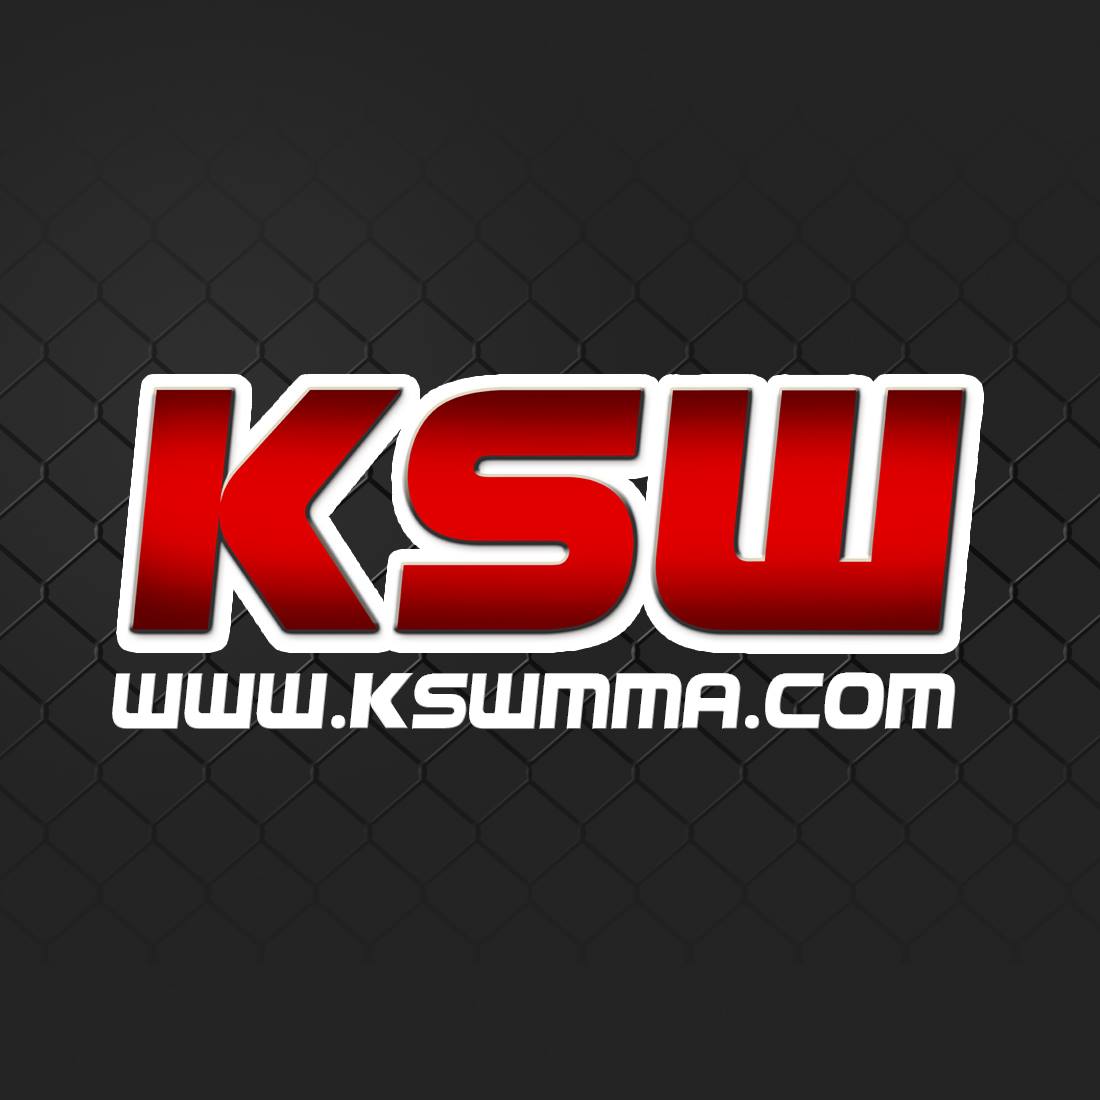 ksw logo web.jpg